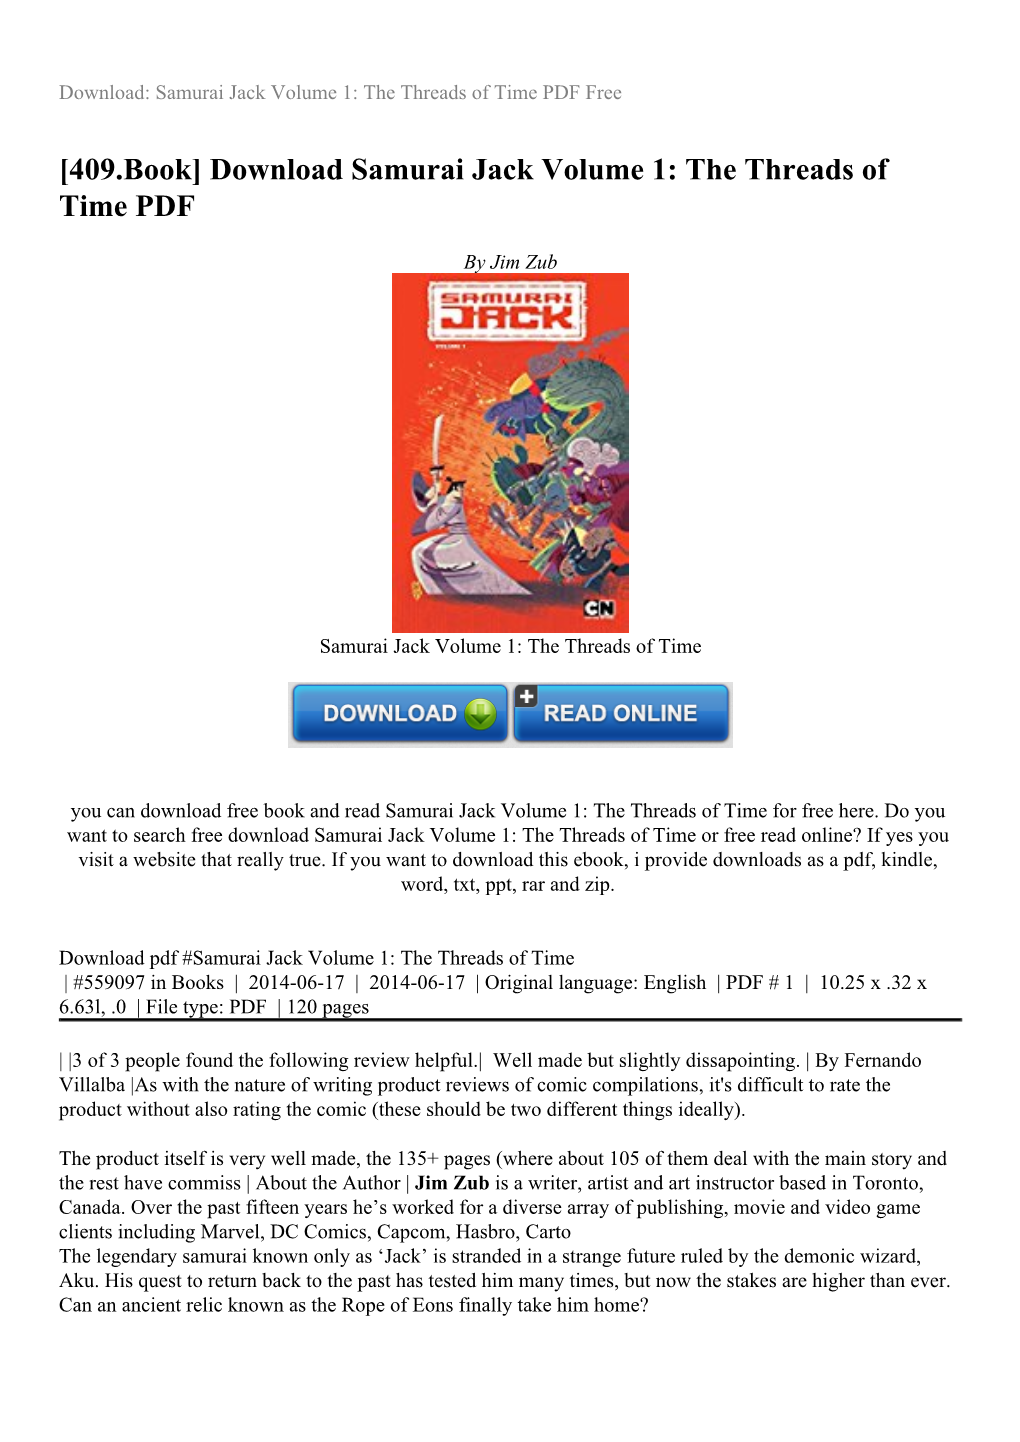 Download Samurai Jack Volume 1: the Threads of Time PDF